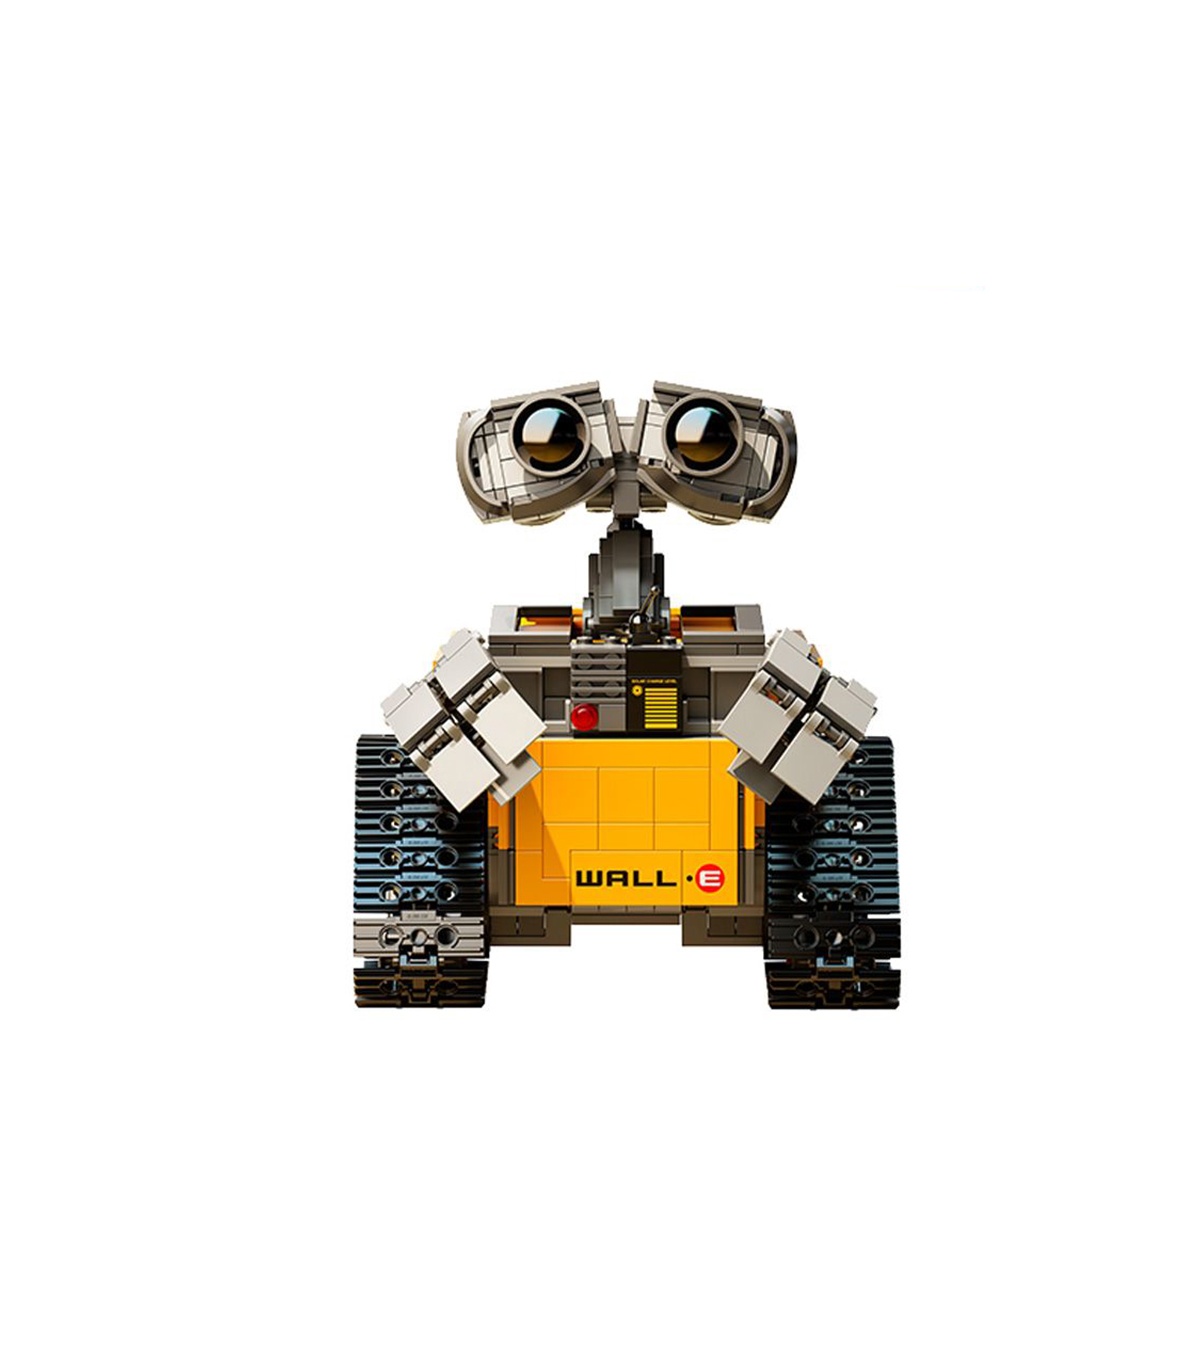 New Lego Disney Pixar Wall E Robot  Building Block Gift Games Figure Action Toy 